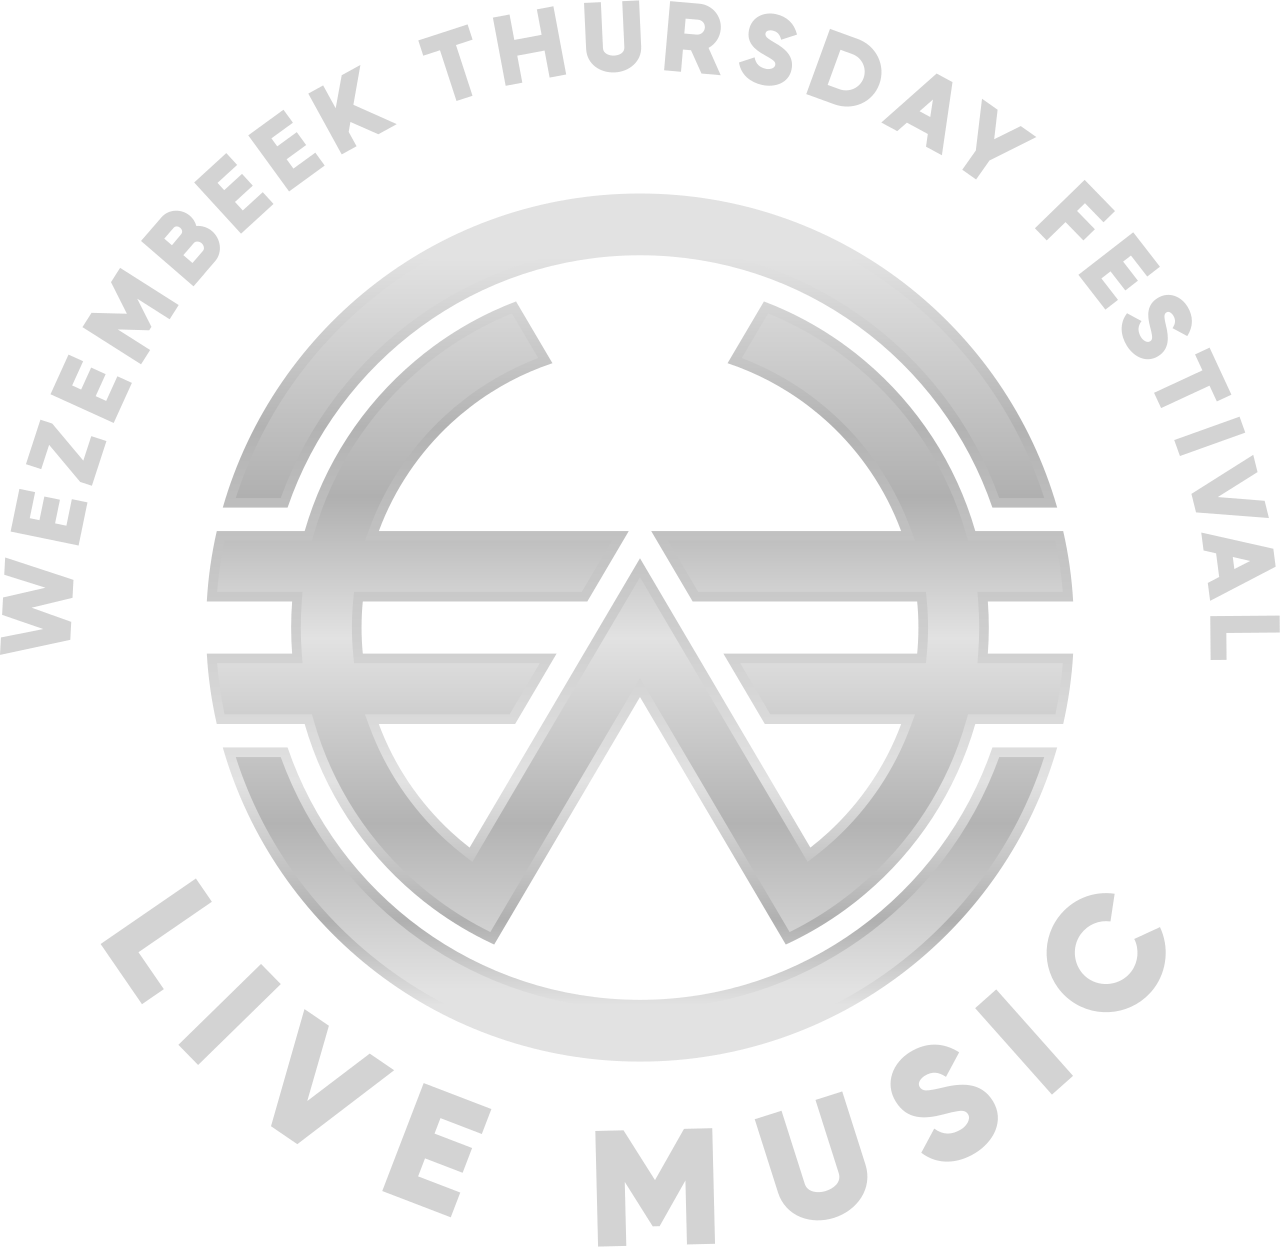 Wezembeek Thursday Festival's logo